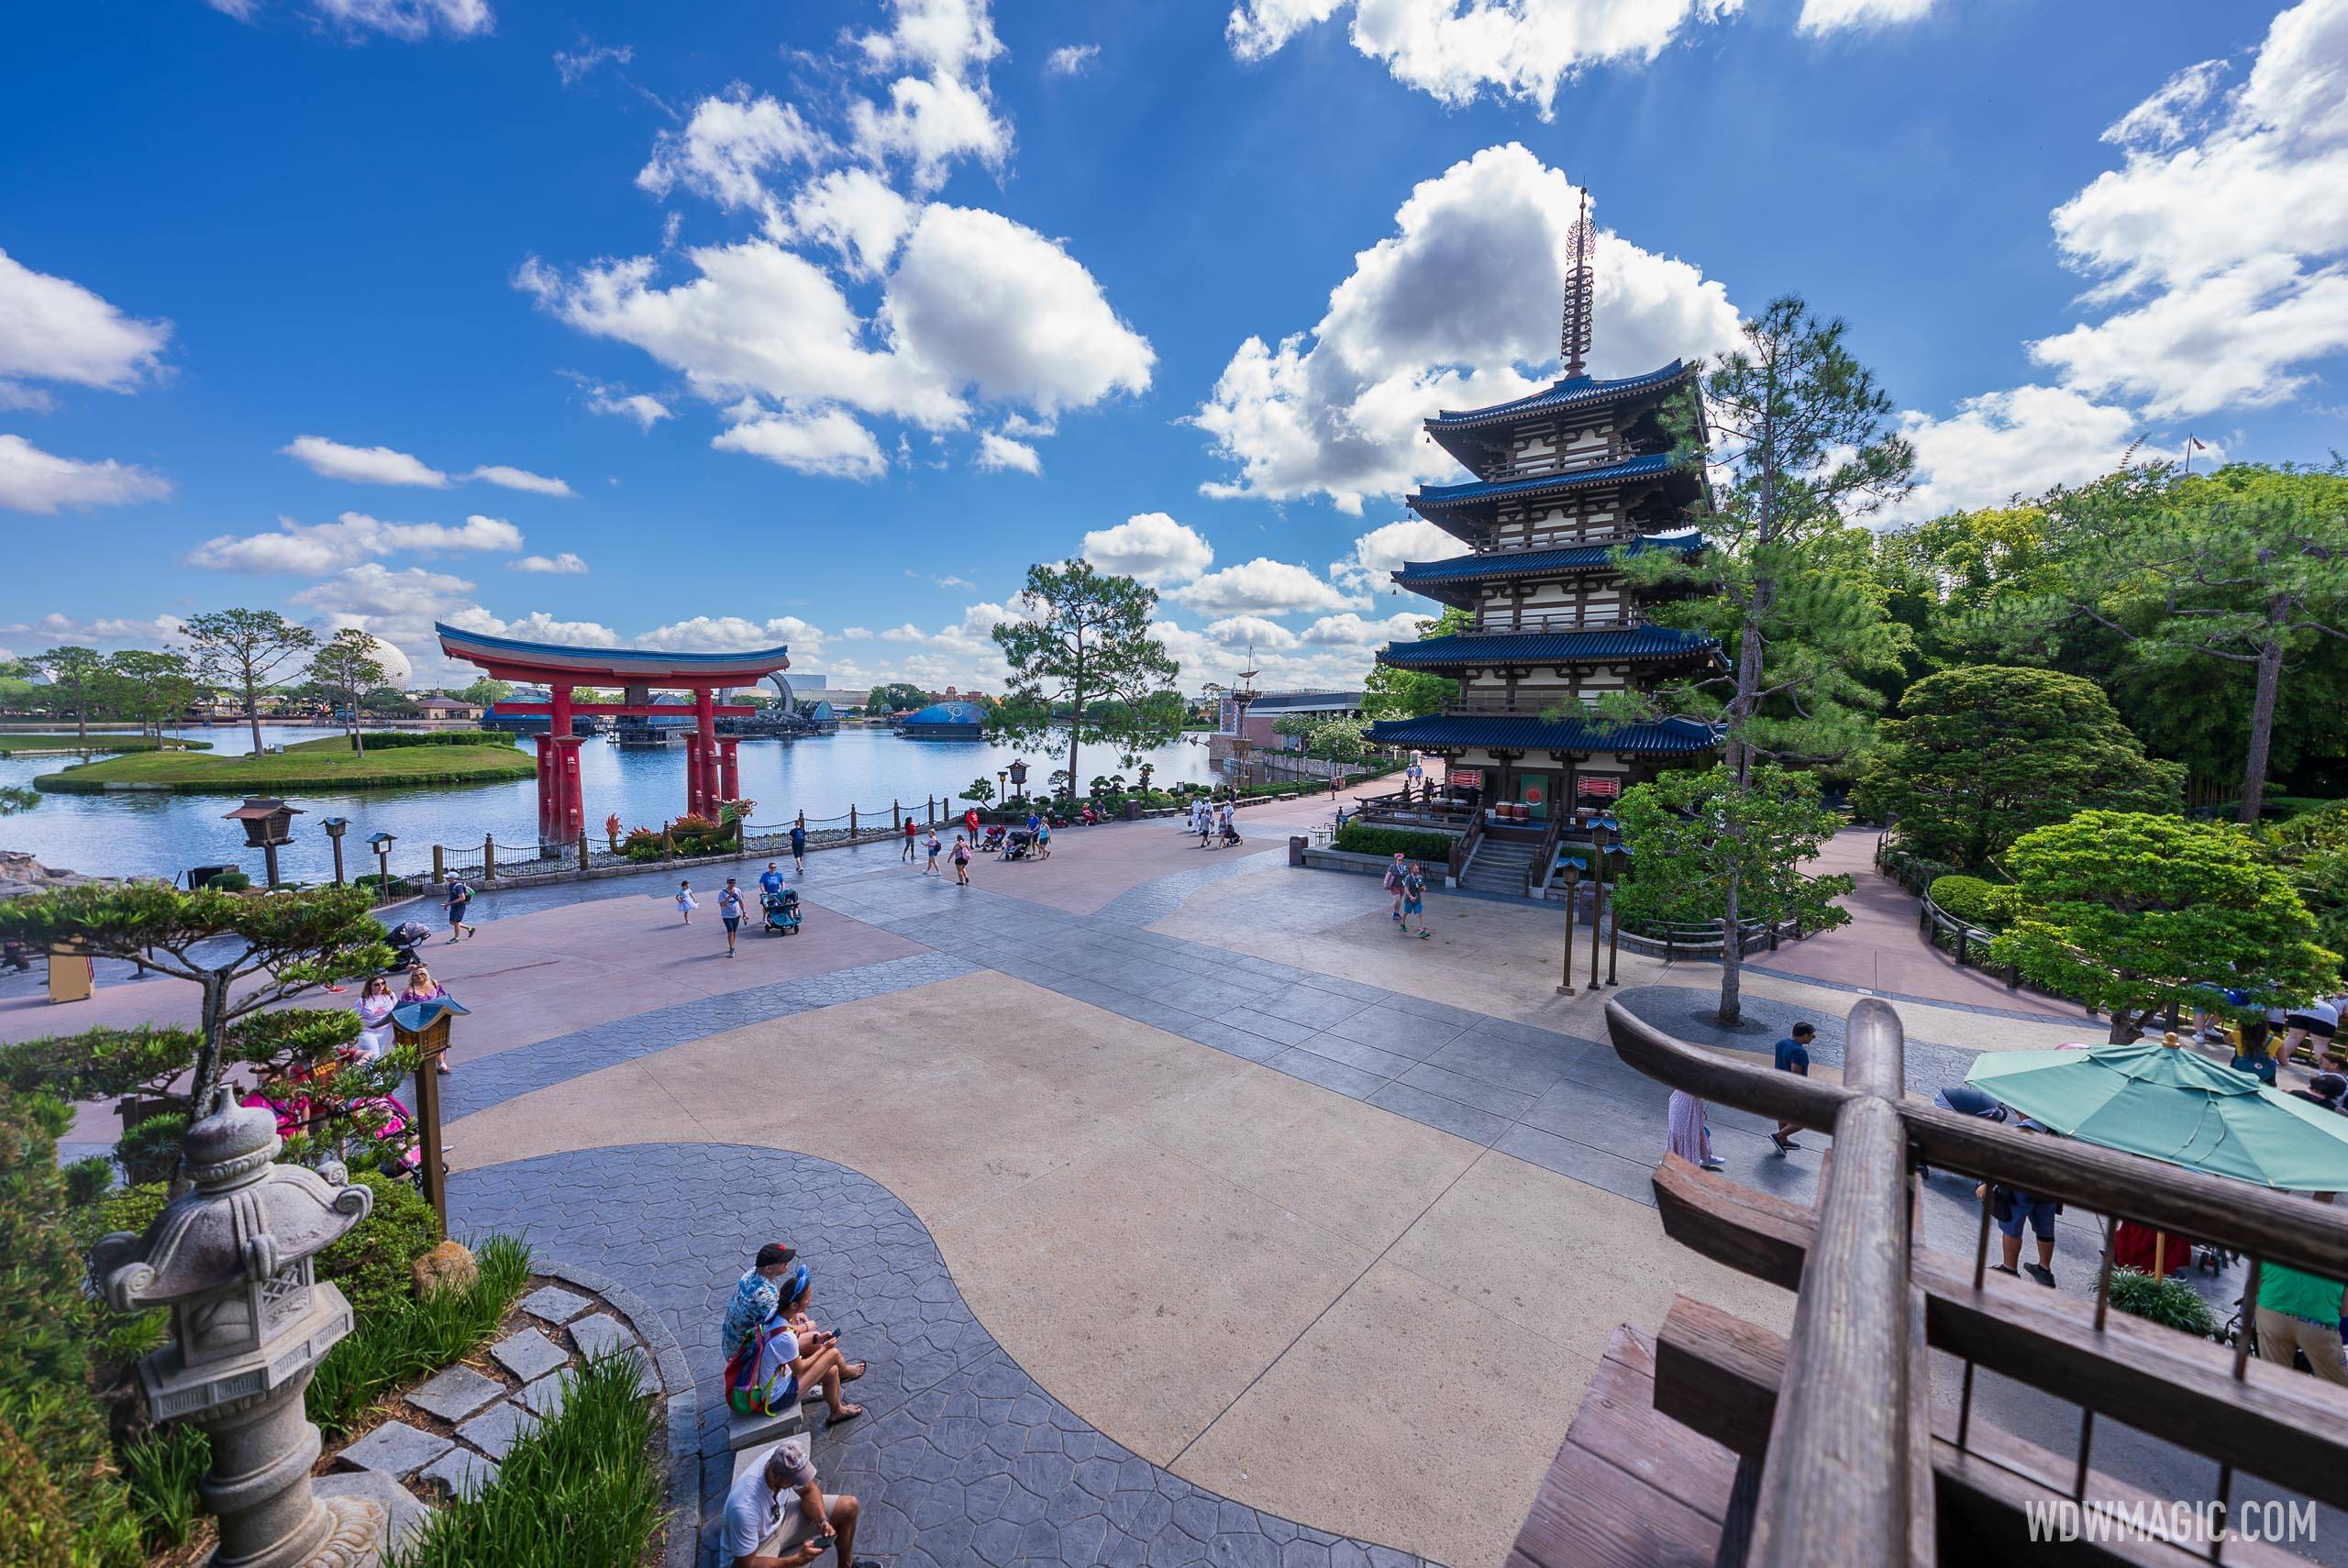 Japan Pavilion concrete work - May 2022